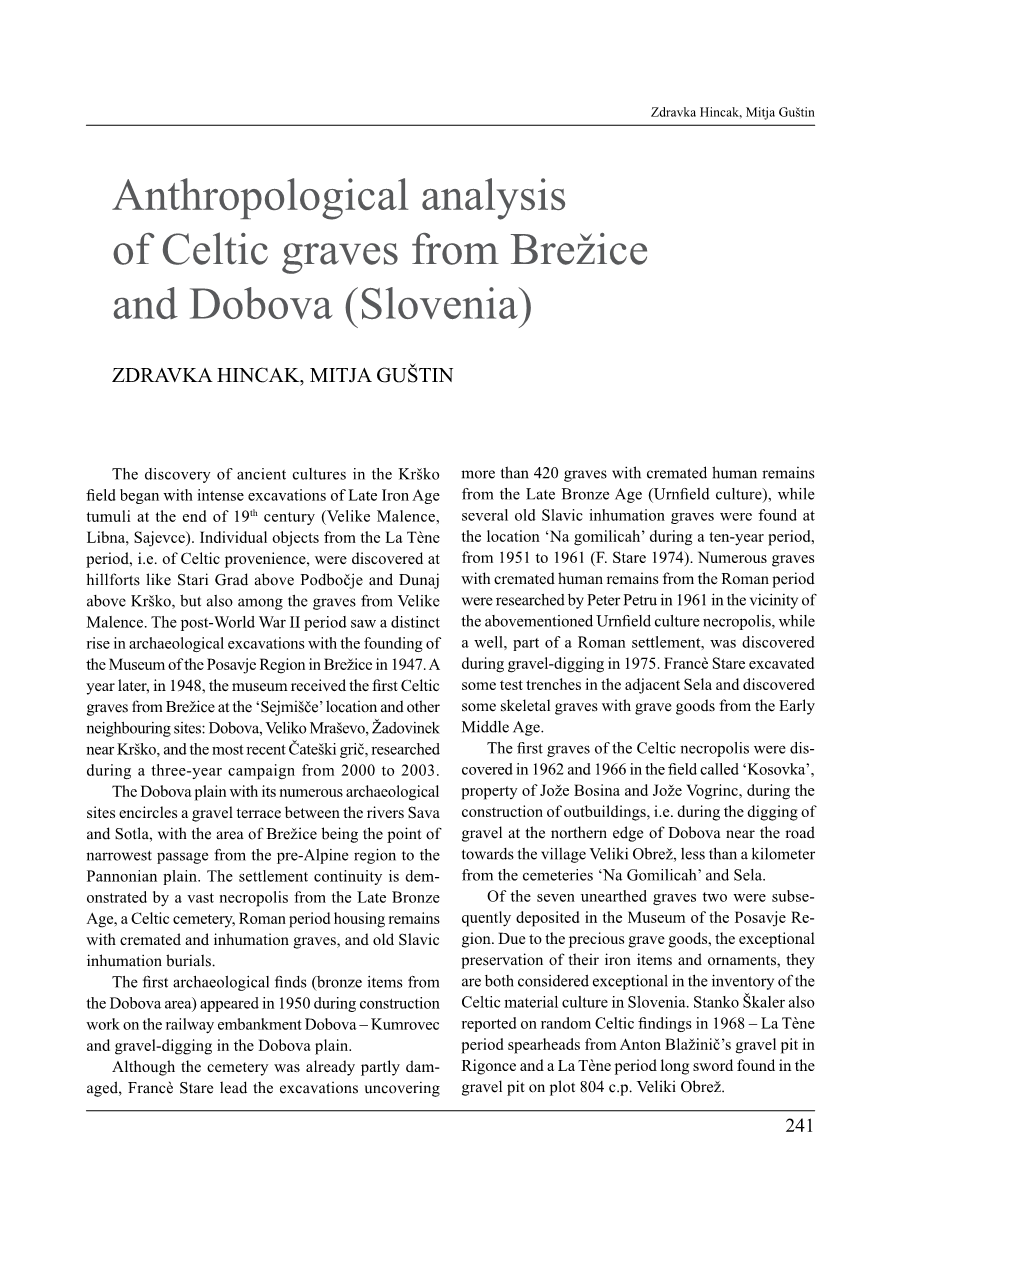 Anthropological Analysis of Celtic Graves from Brežice and Dobova (Slovenia)